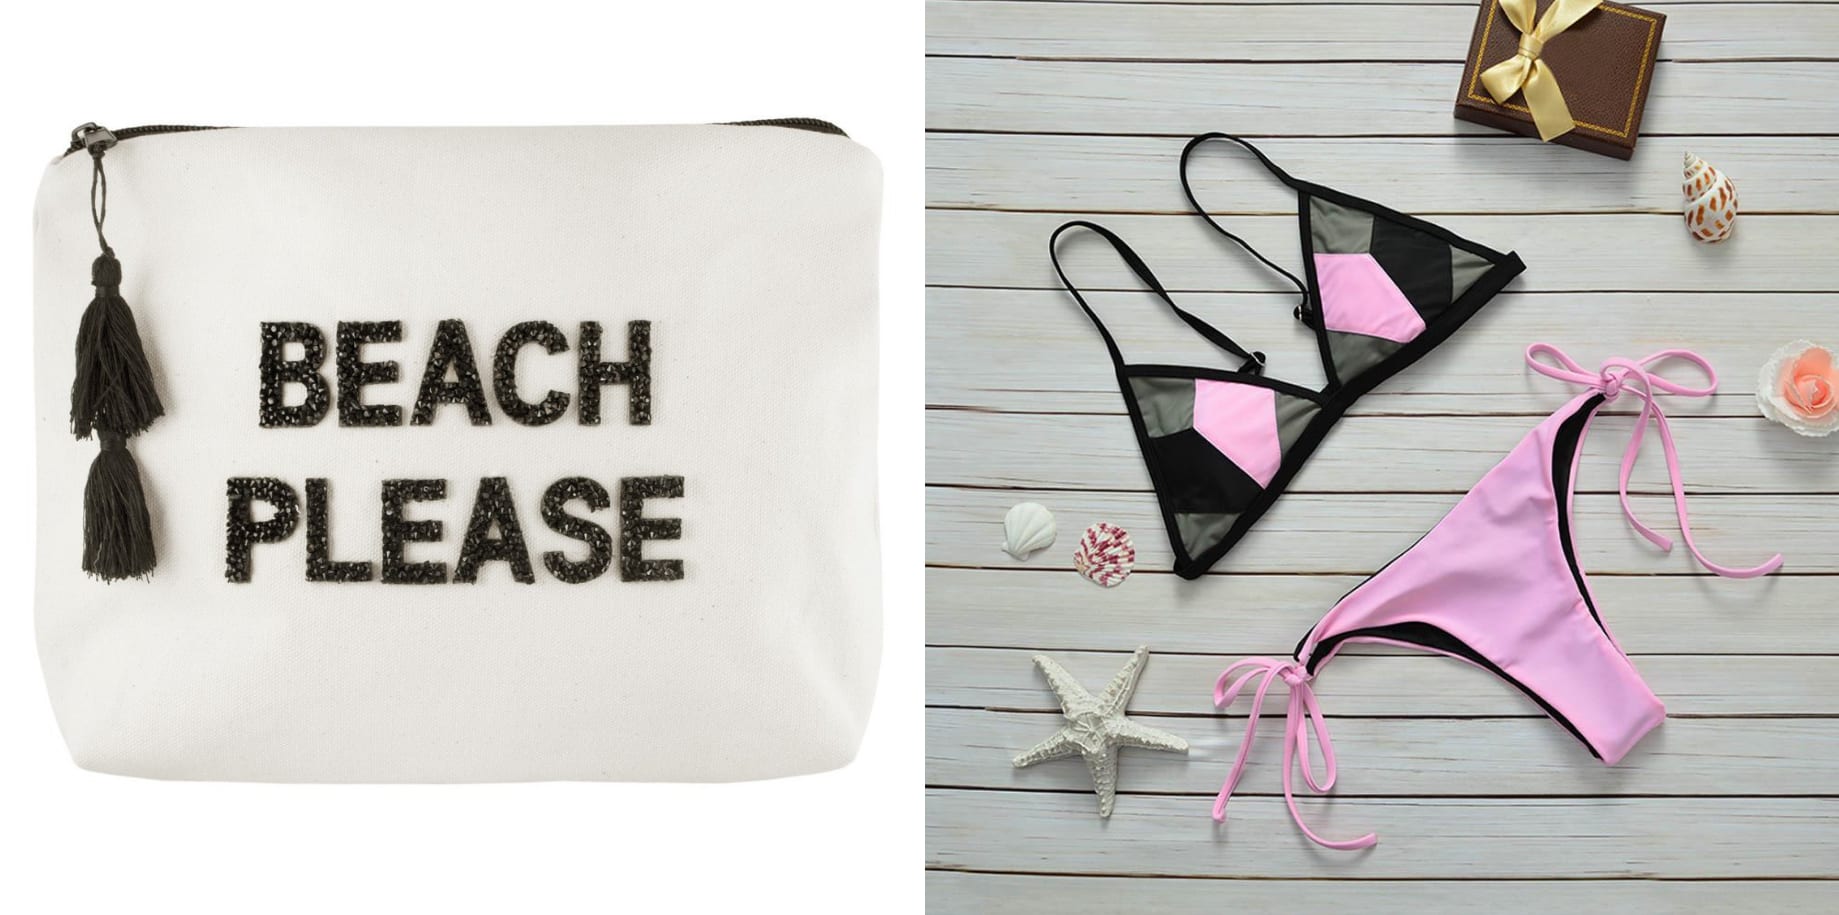 Image of a pink bikini and a bikini bag